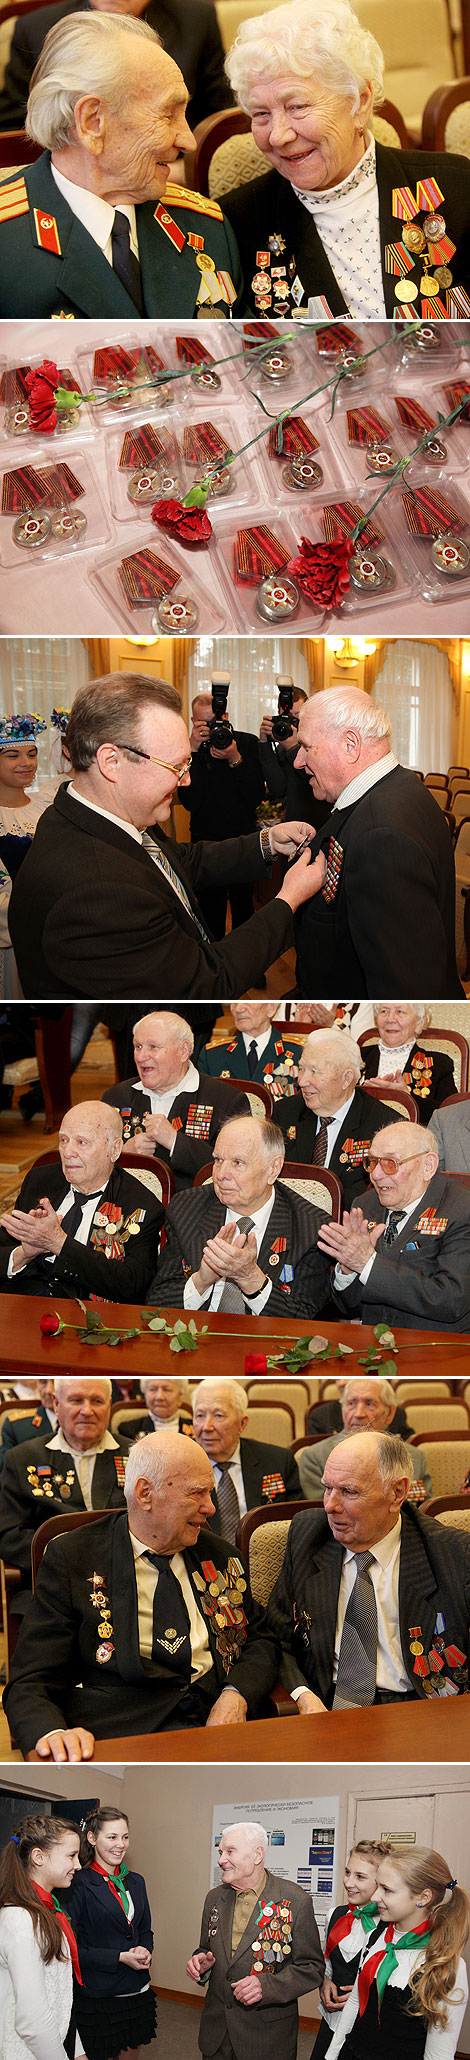 Conferment of medals on Great Patriotic War veterans in Vitebsk